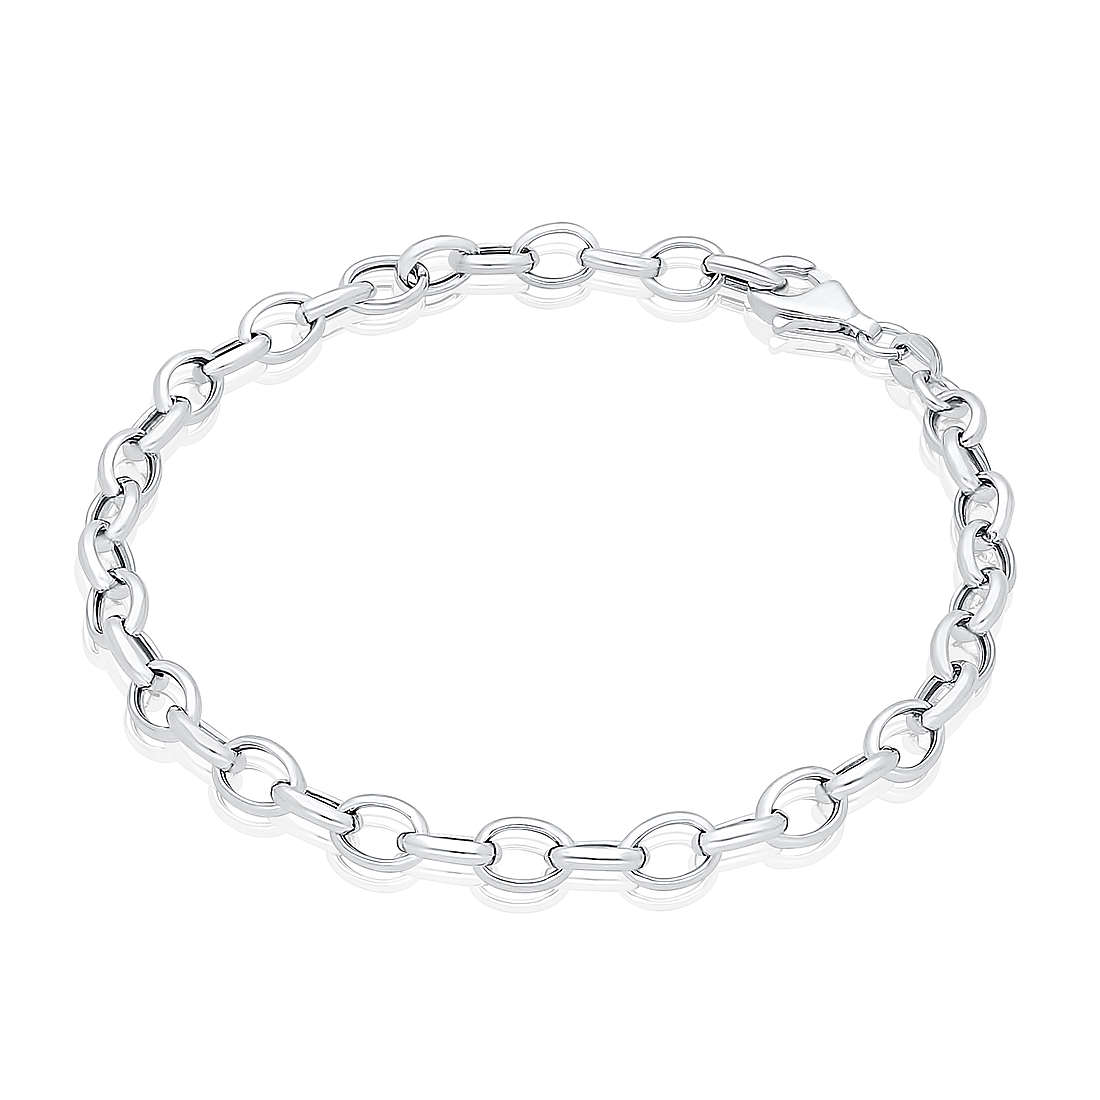 bracelet woman Chain 925 Silver jewel GioiaPura GYBAR00003-S